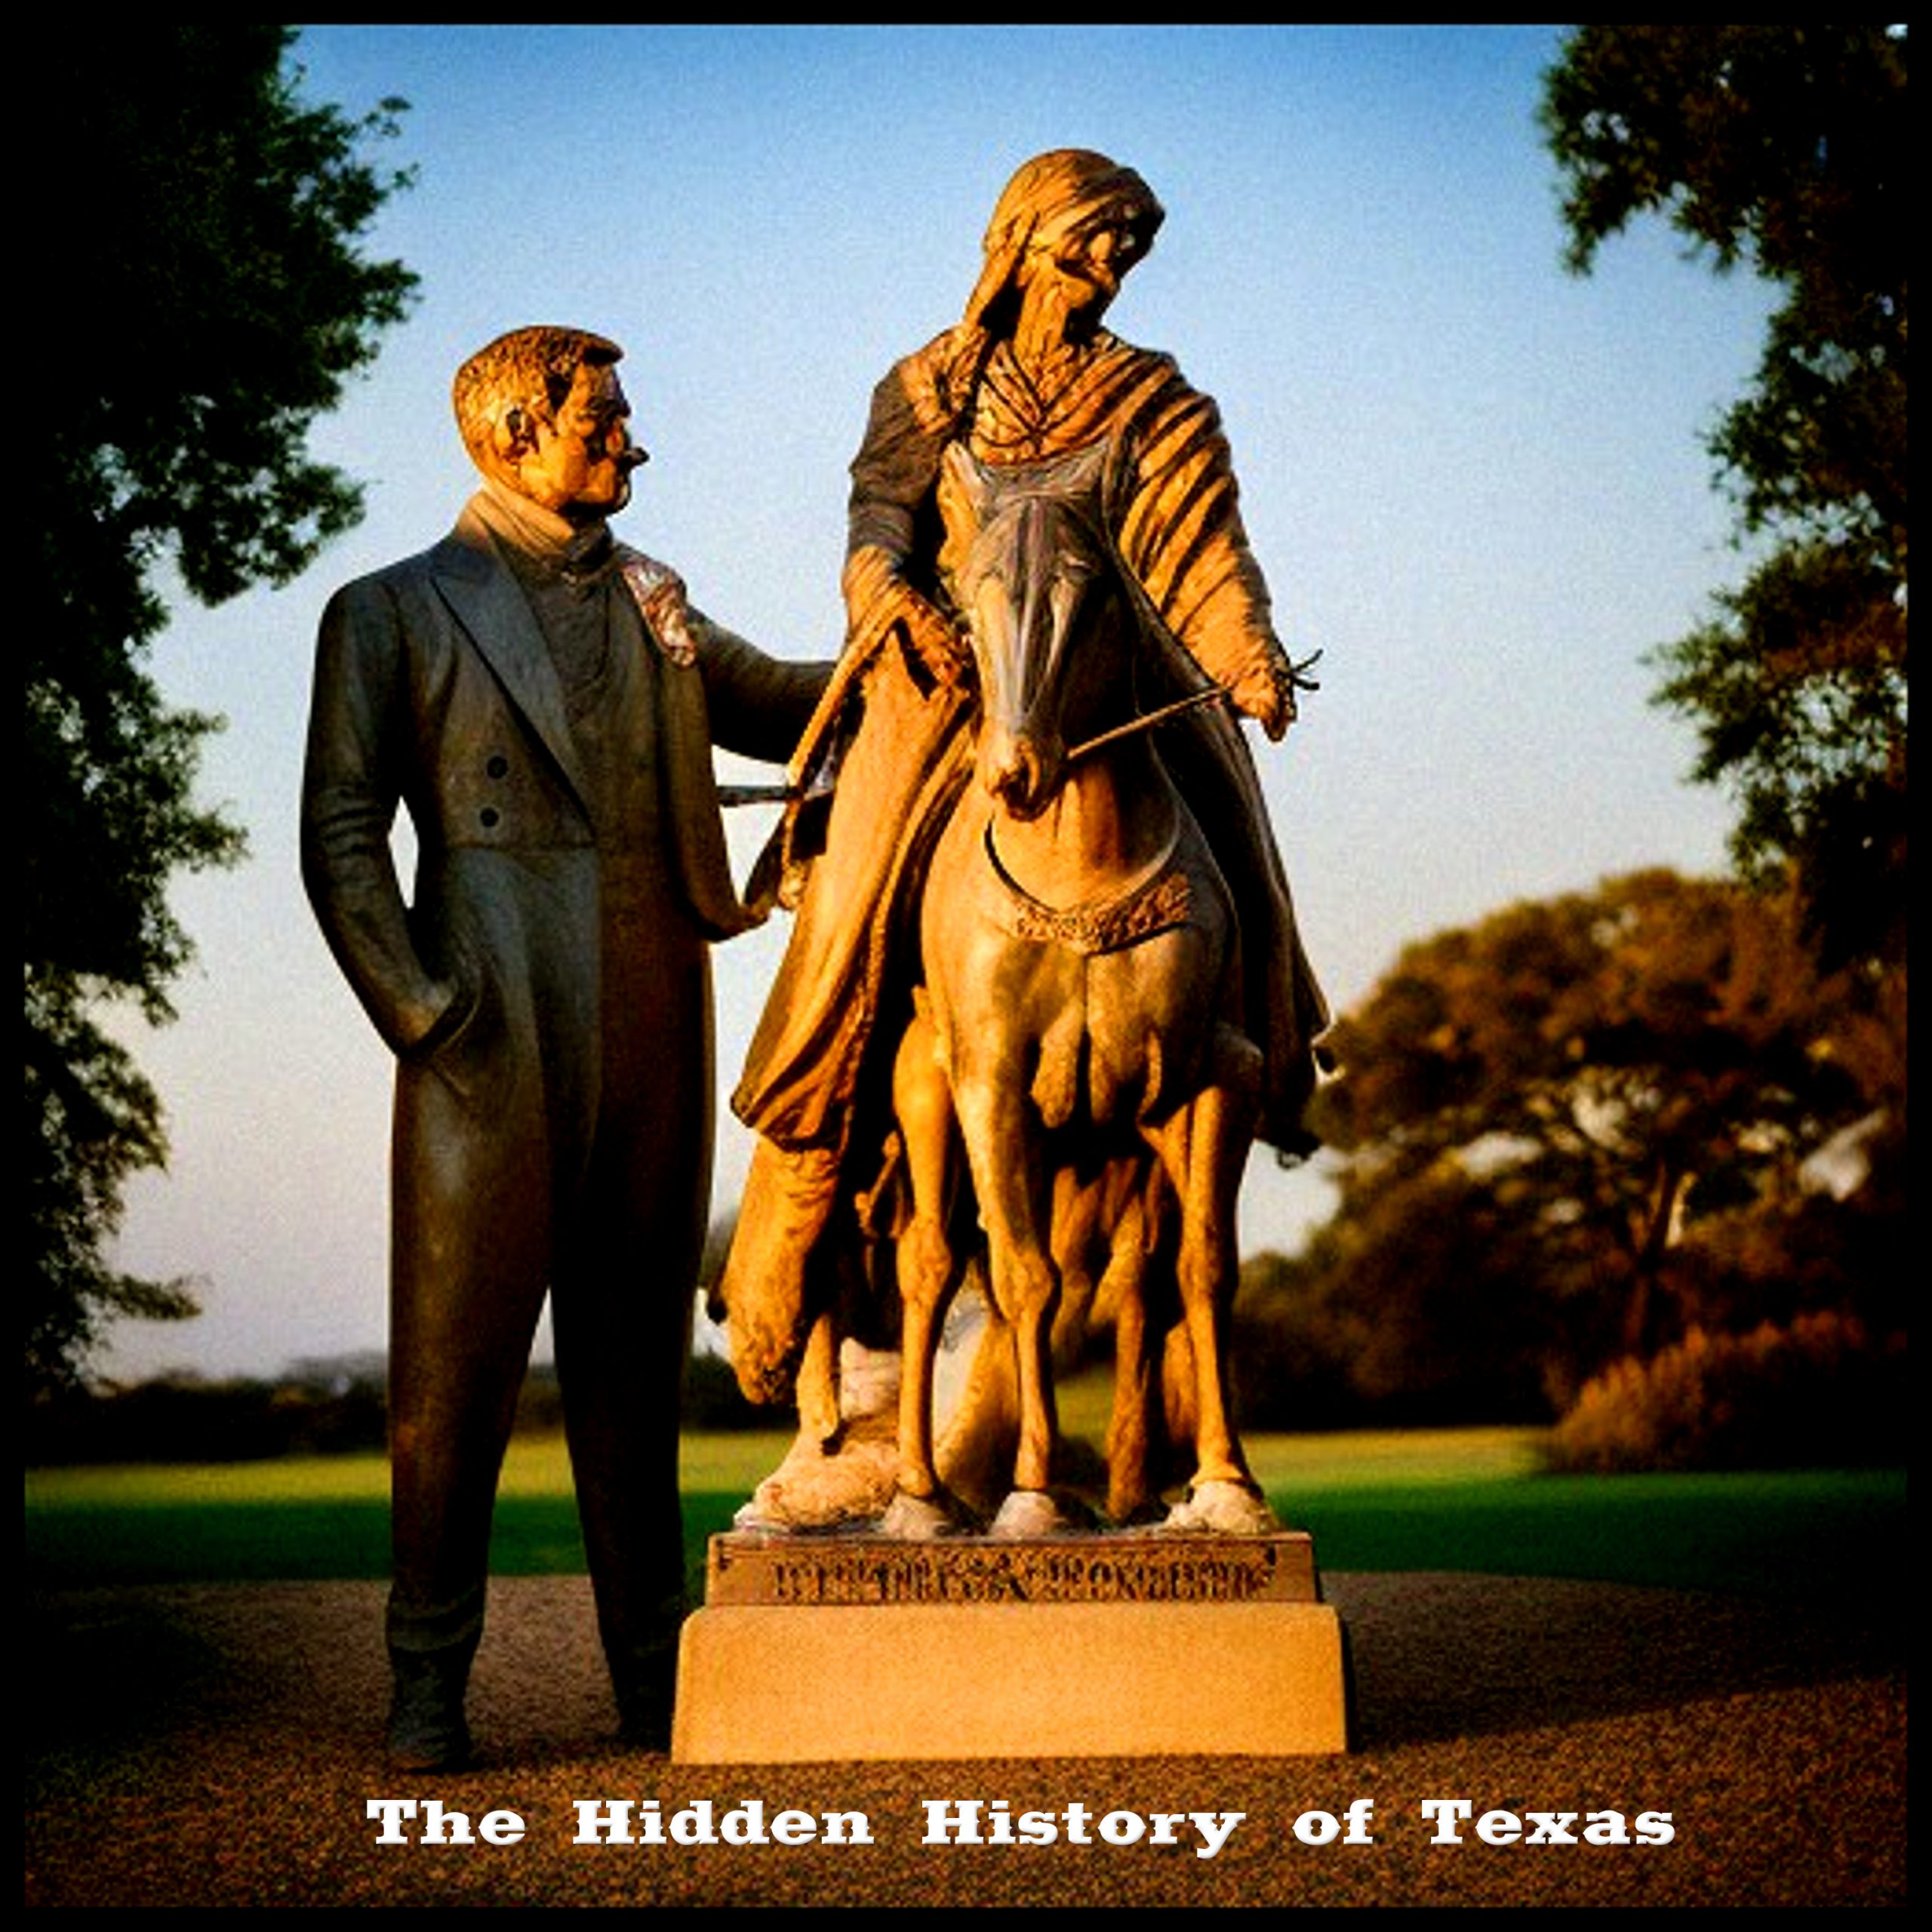 The Hidden History of Texas